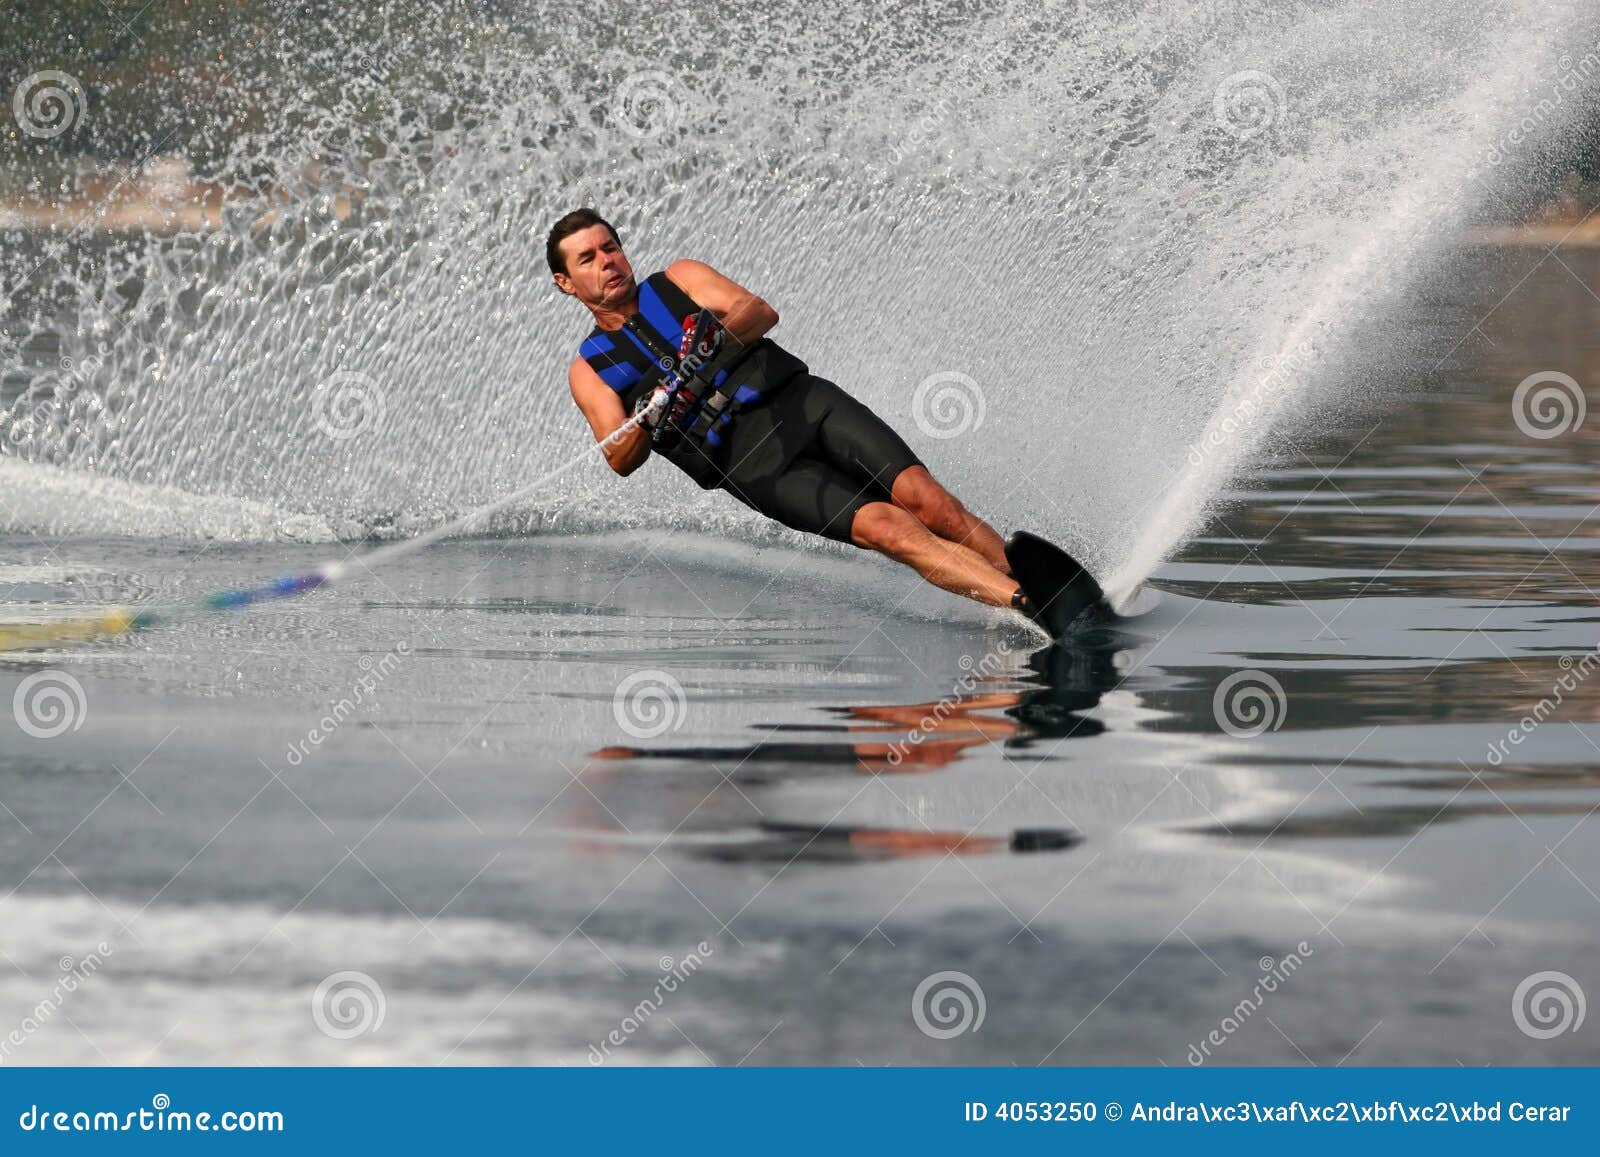 mono waterskiing